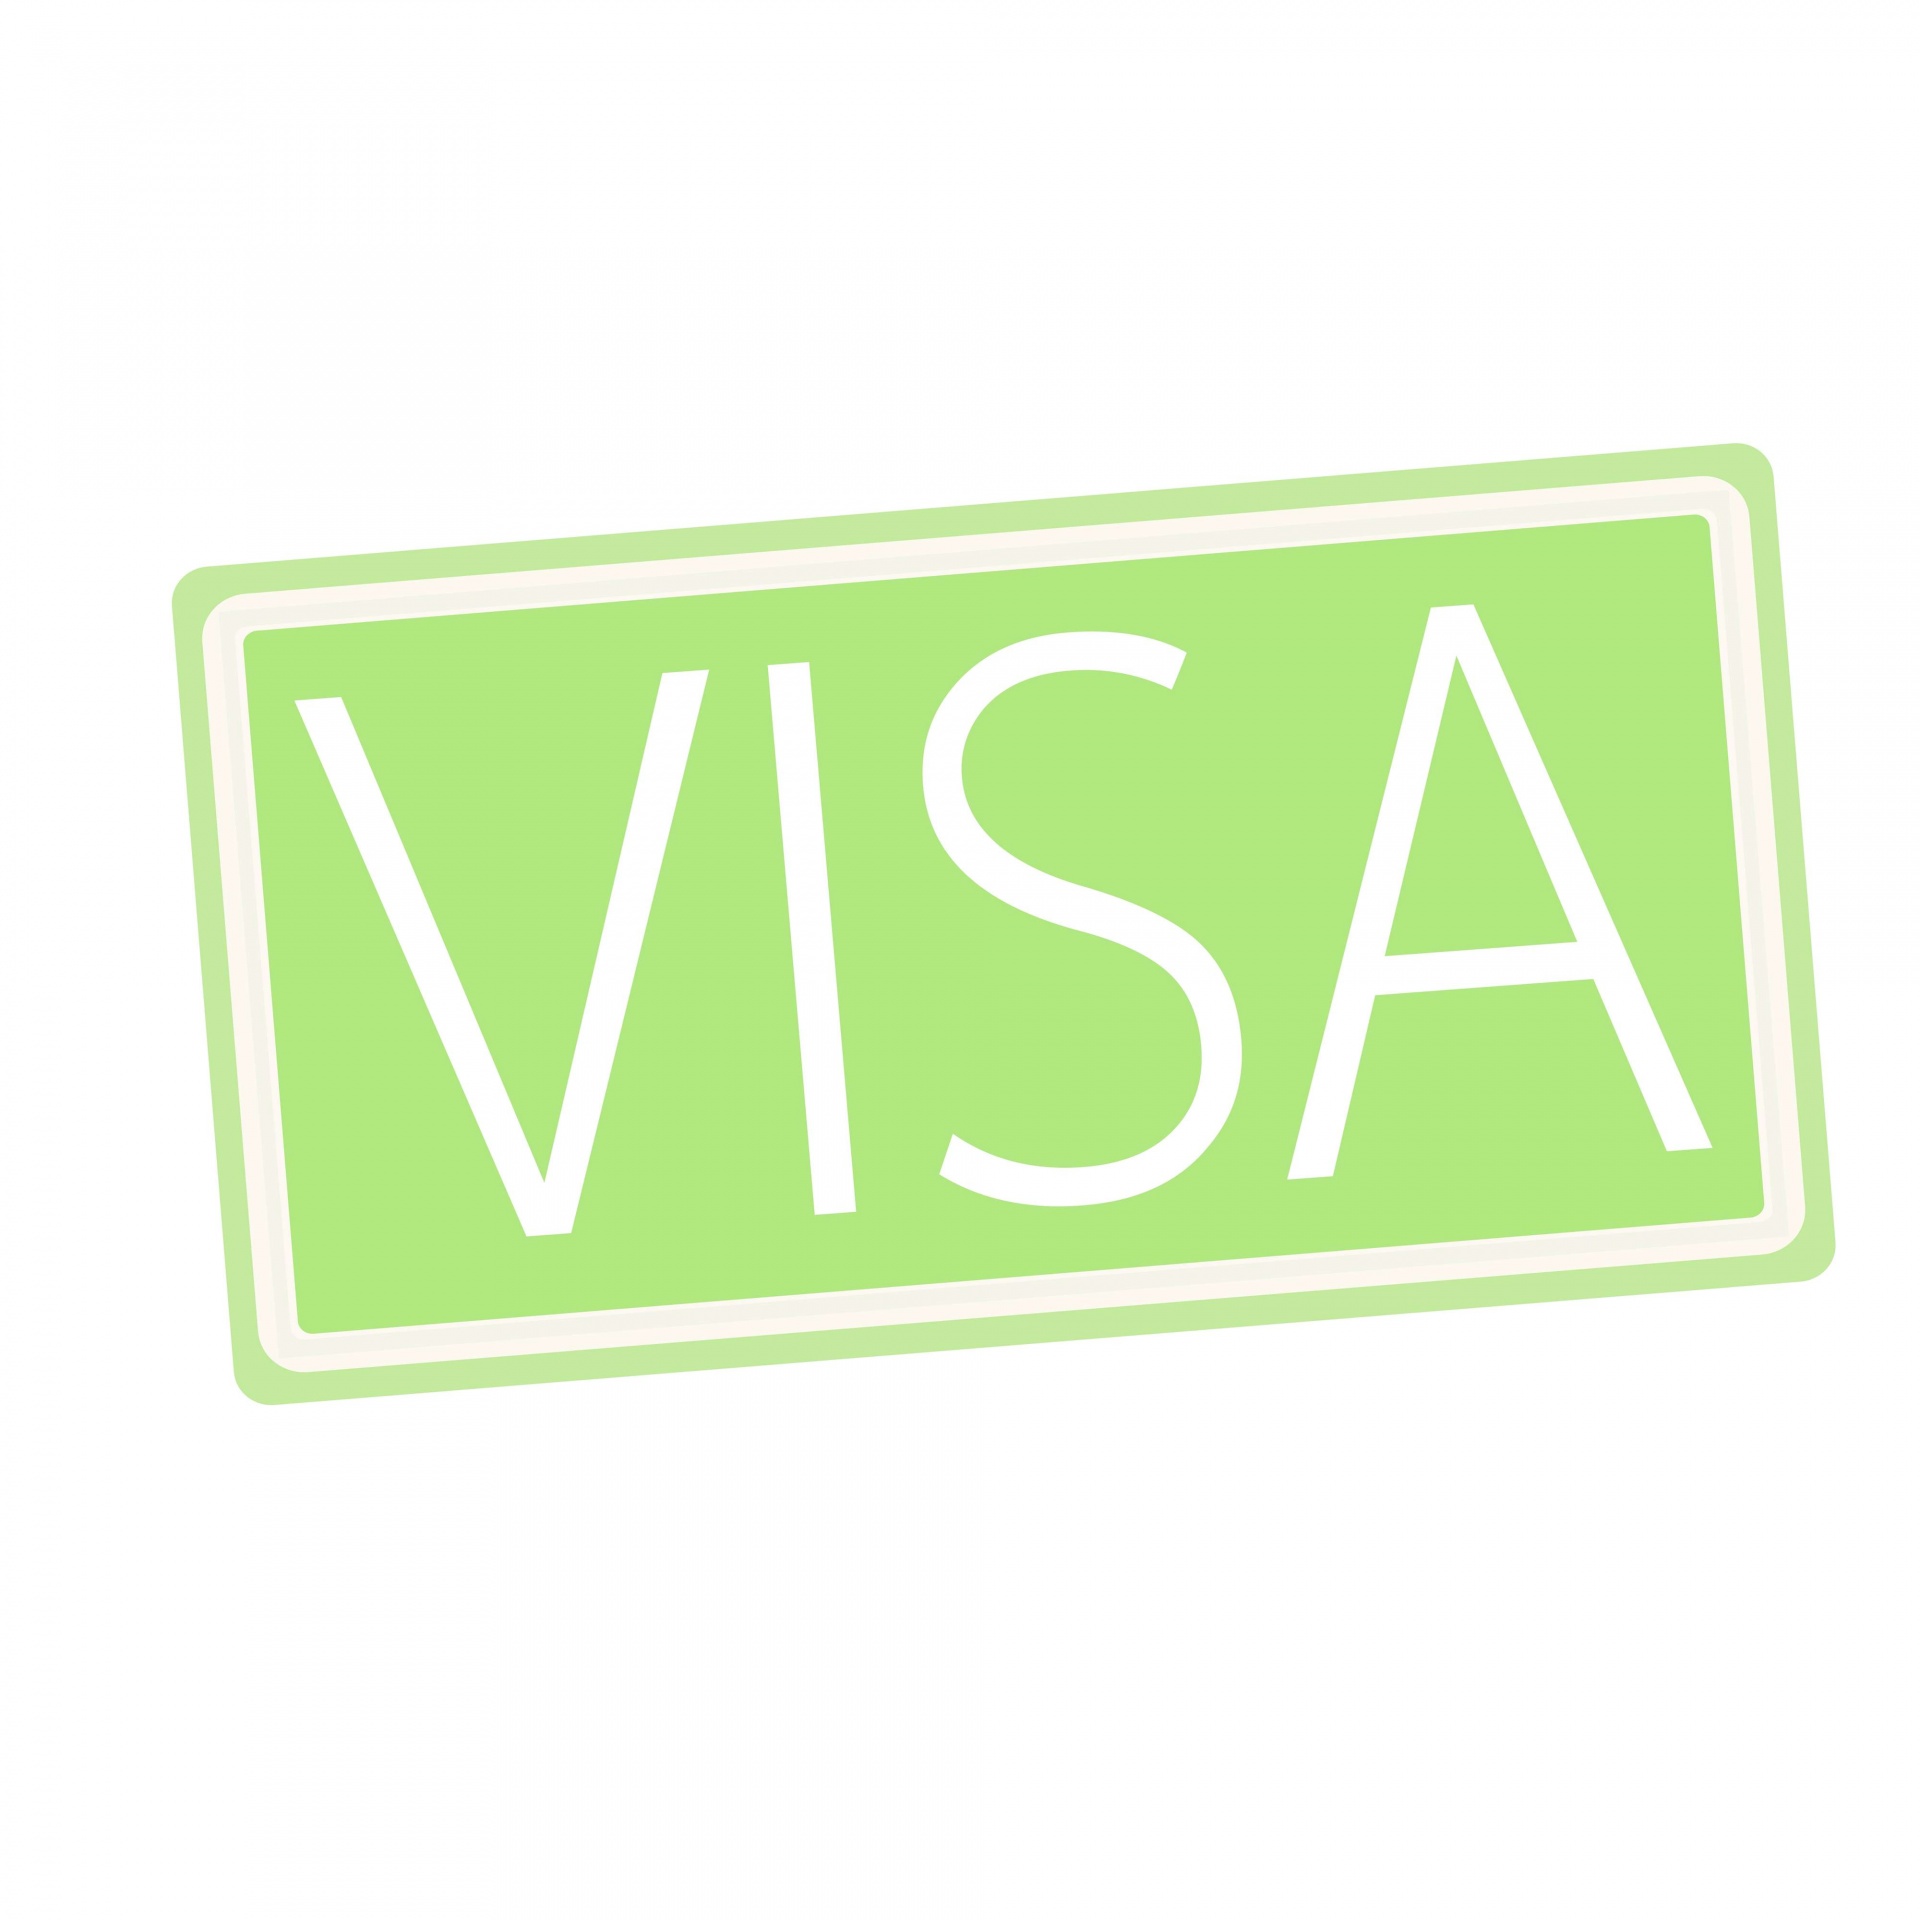 VISA white stamp text on green